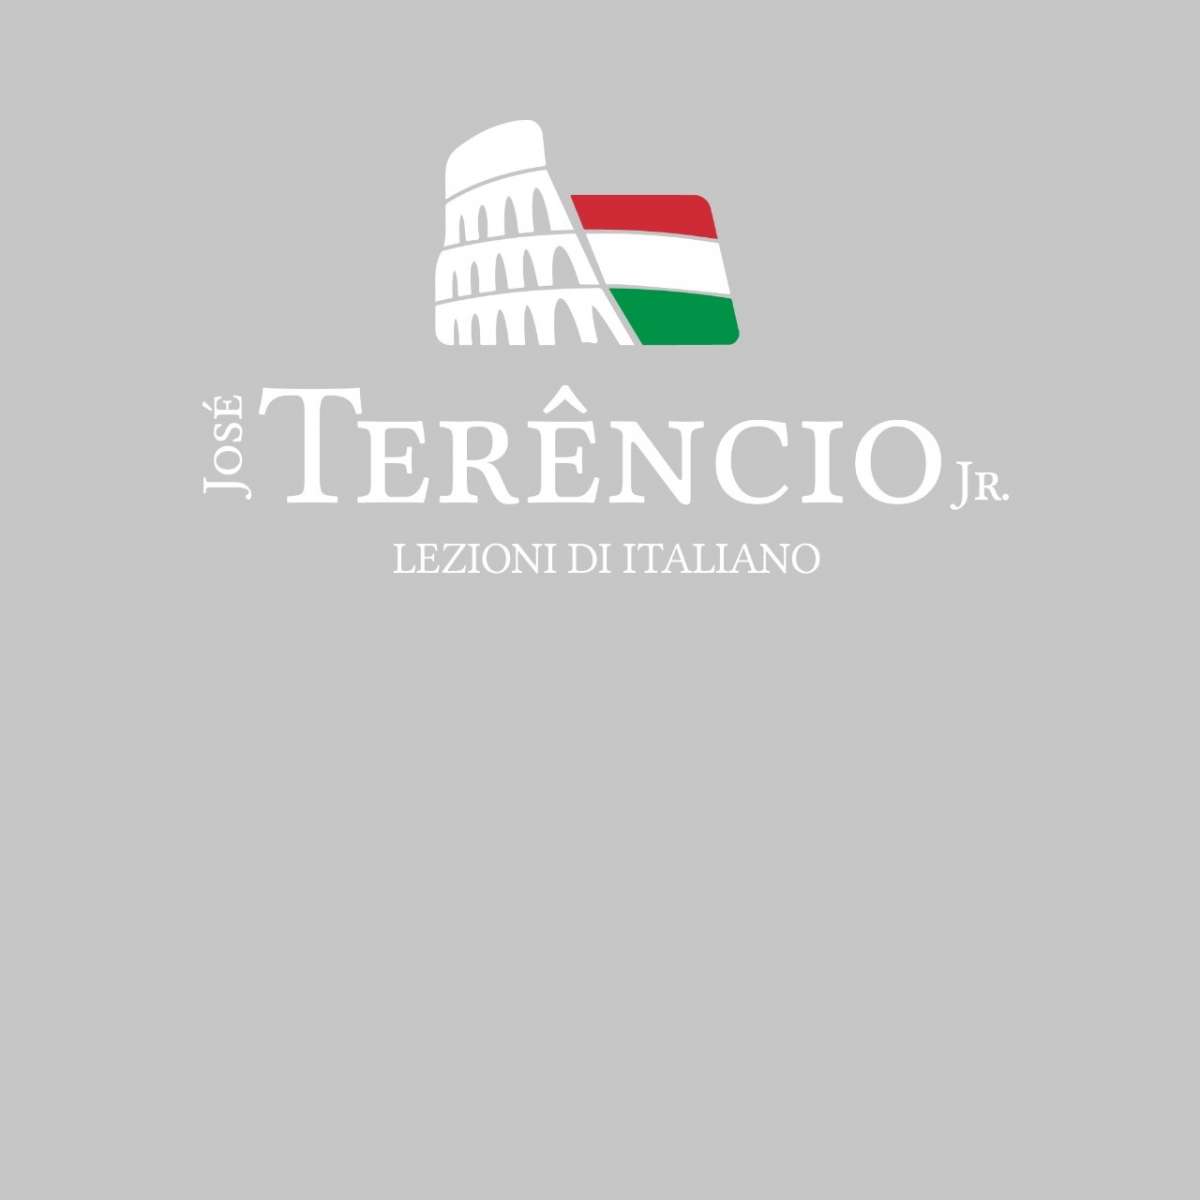 José Terêncio Jr - Albergaria-a-Velha - Aulas de Italiano